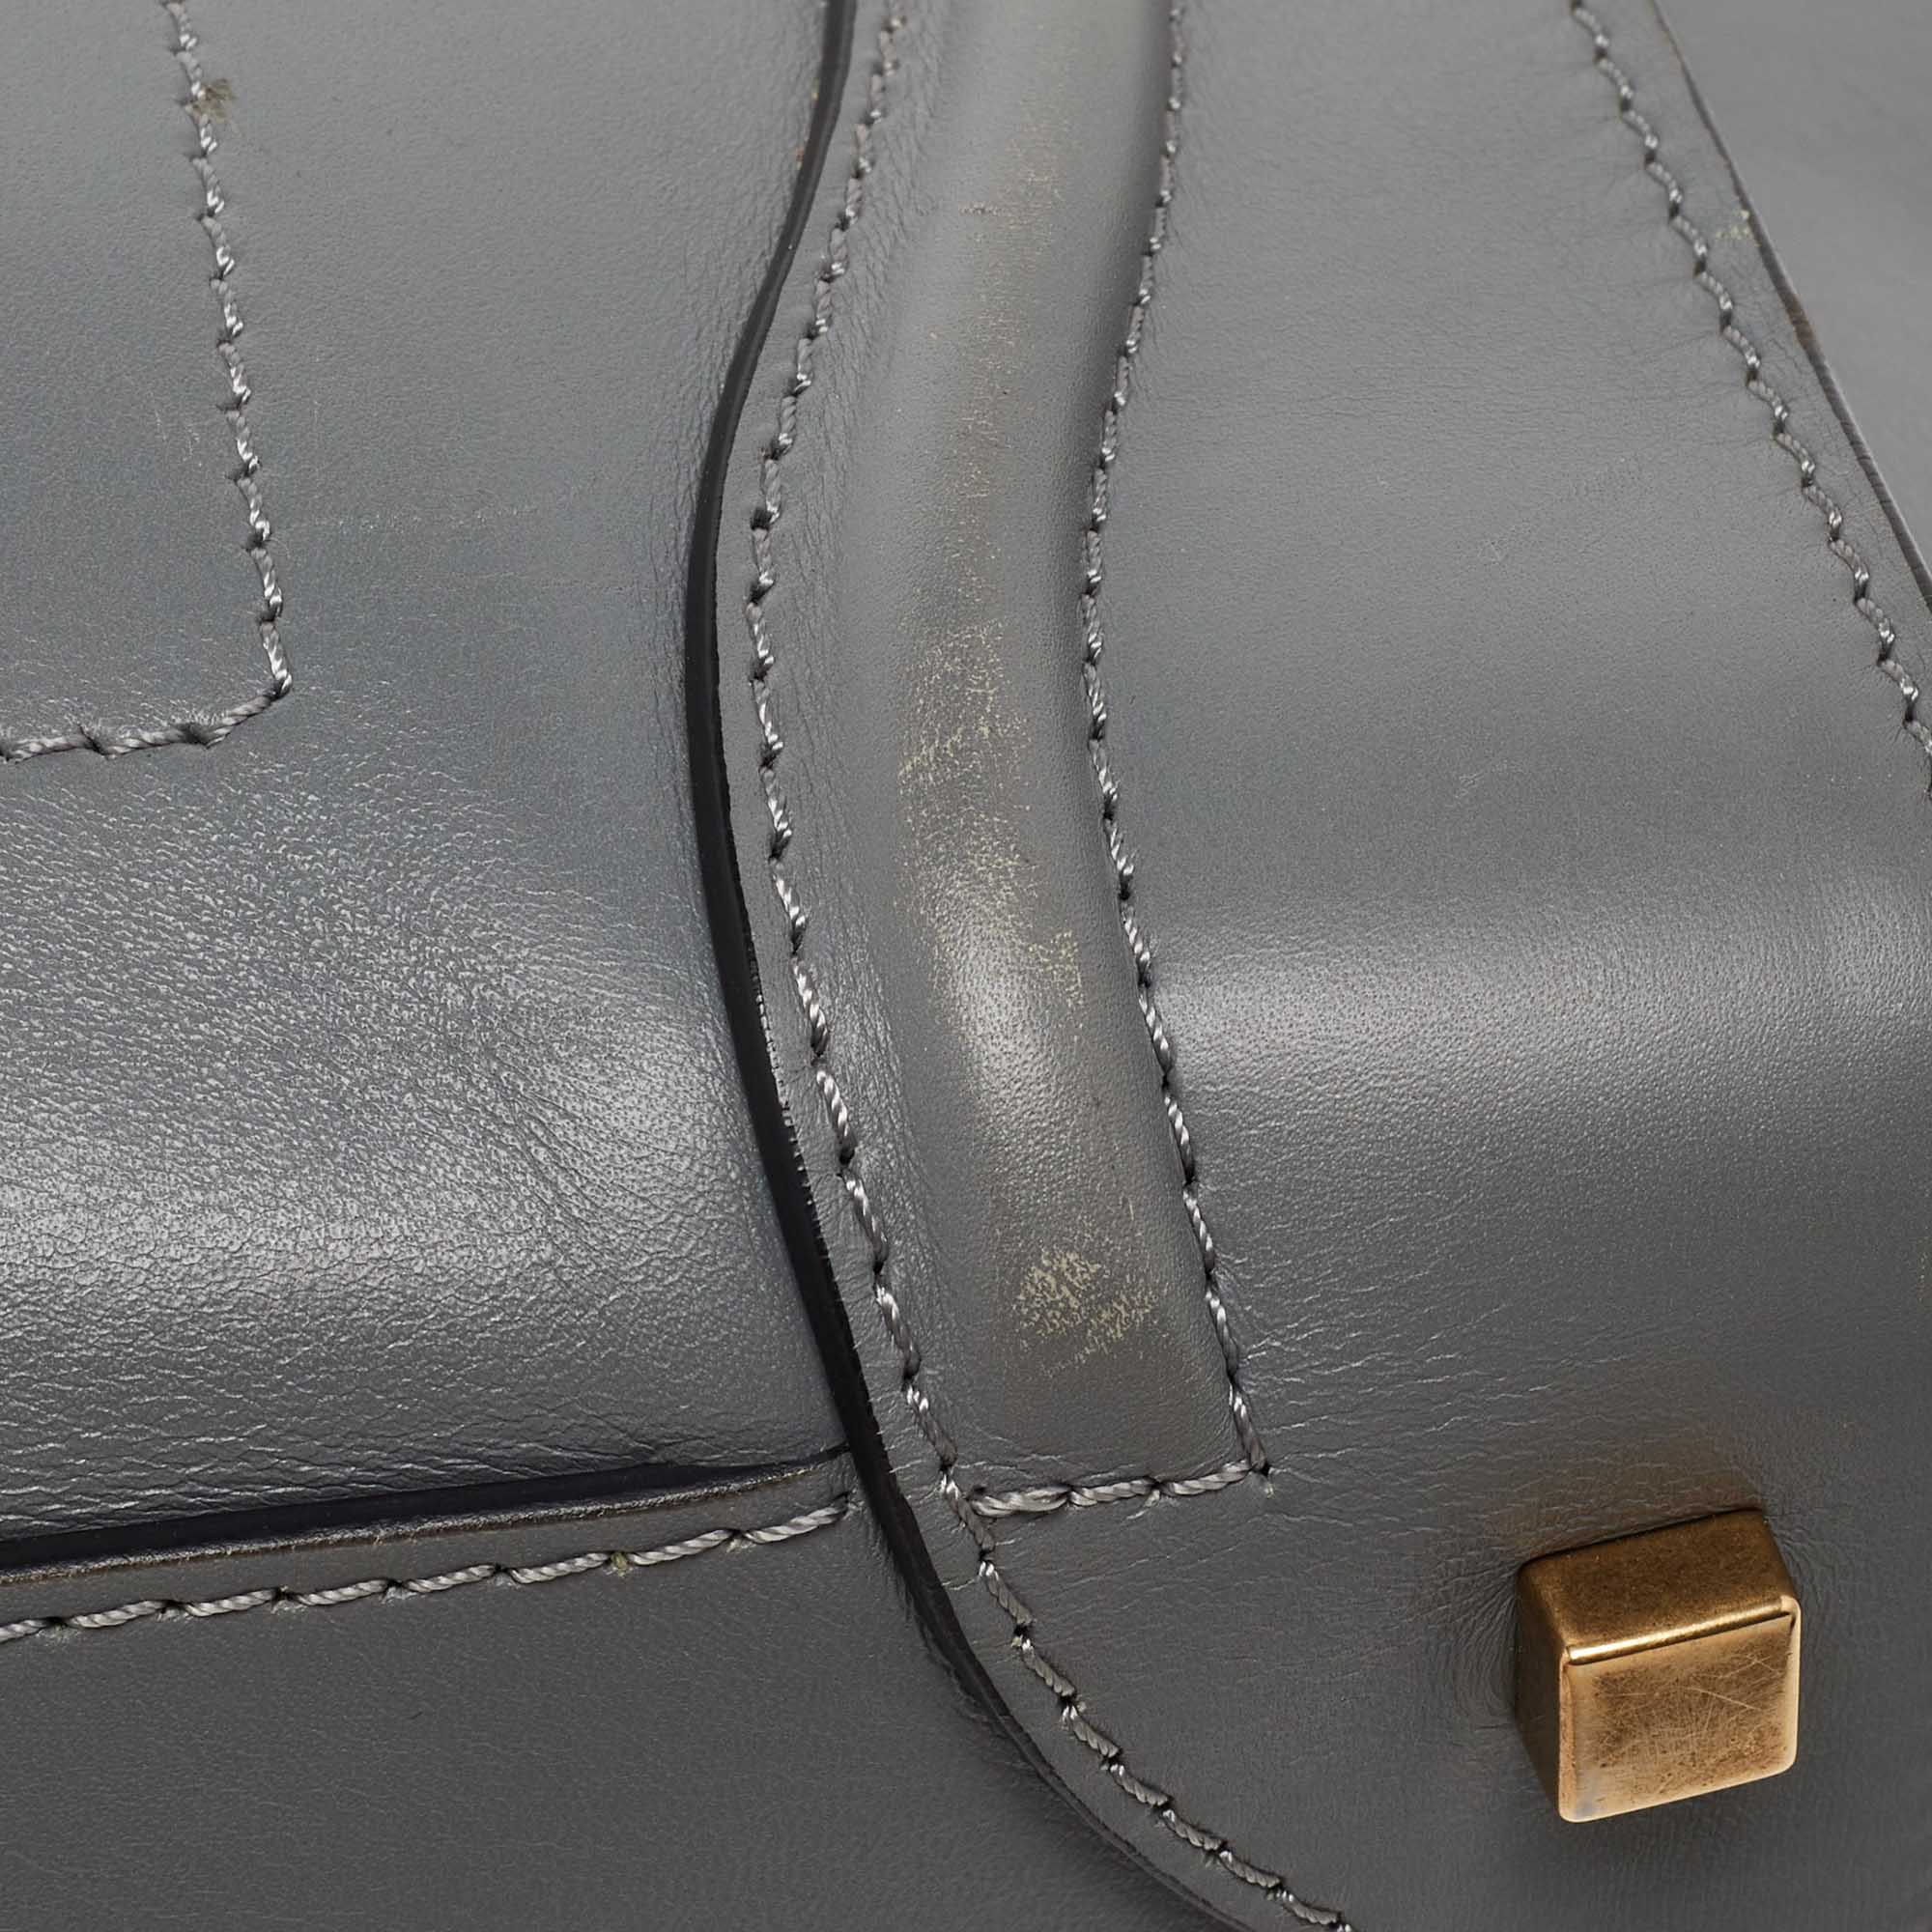 Celine Grey Leather Mini Luggage Tote